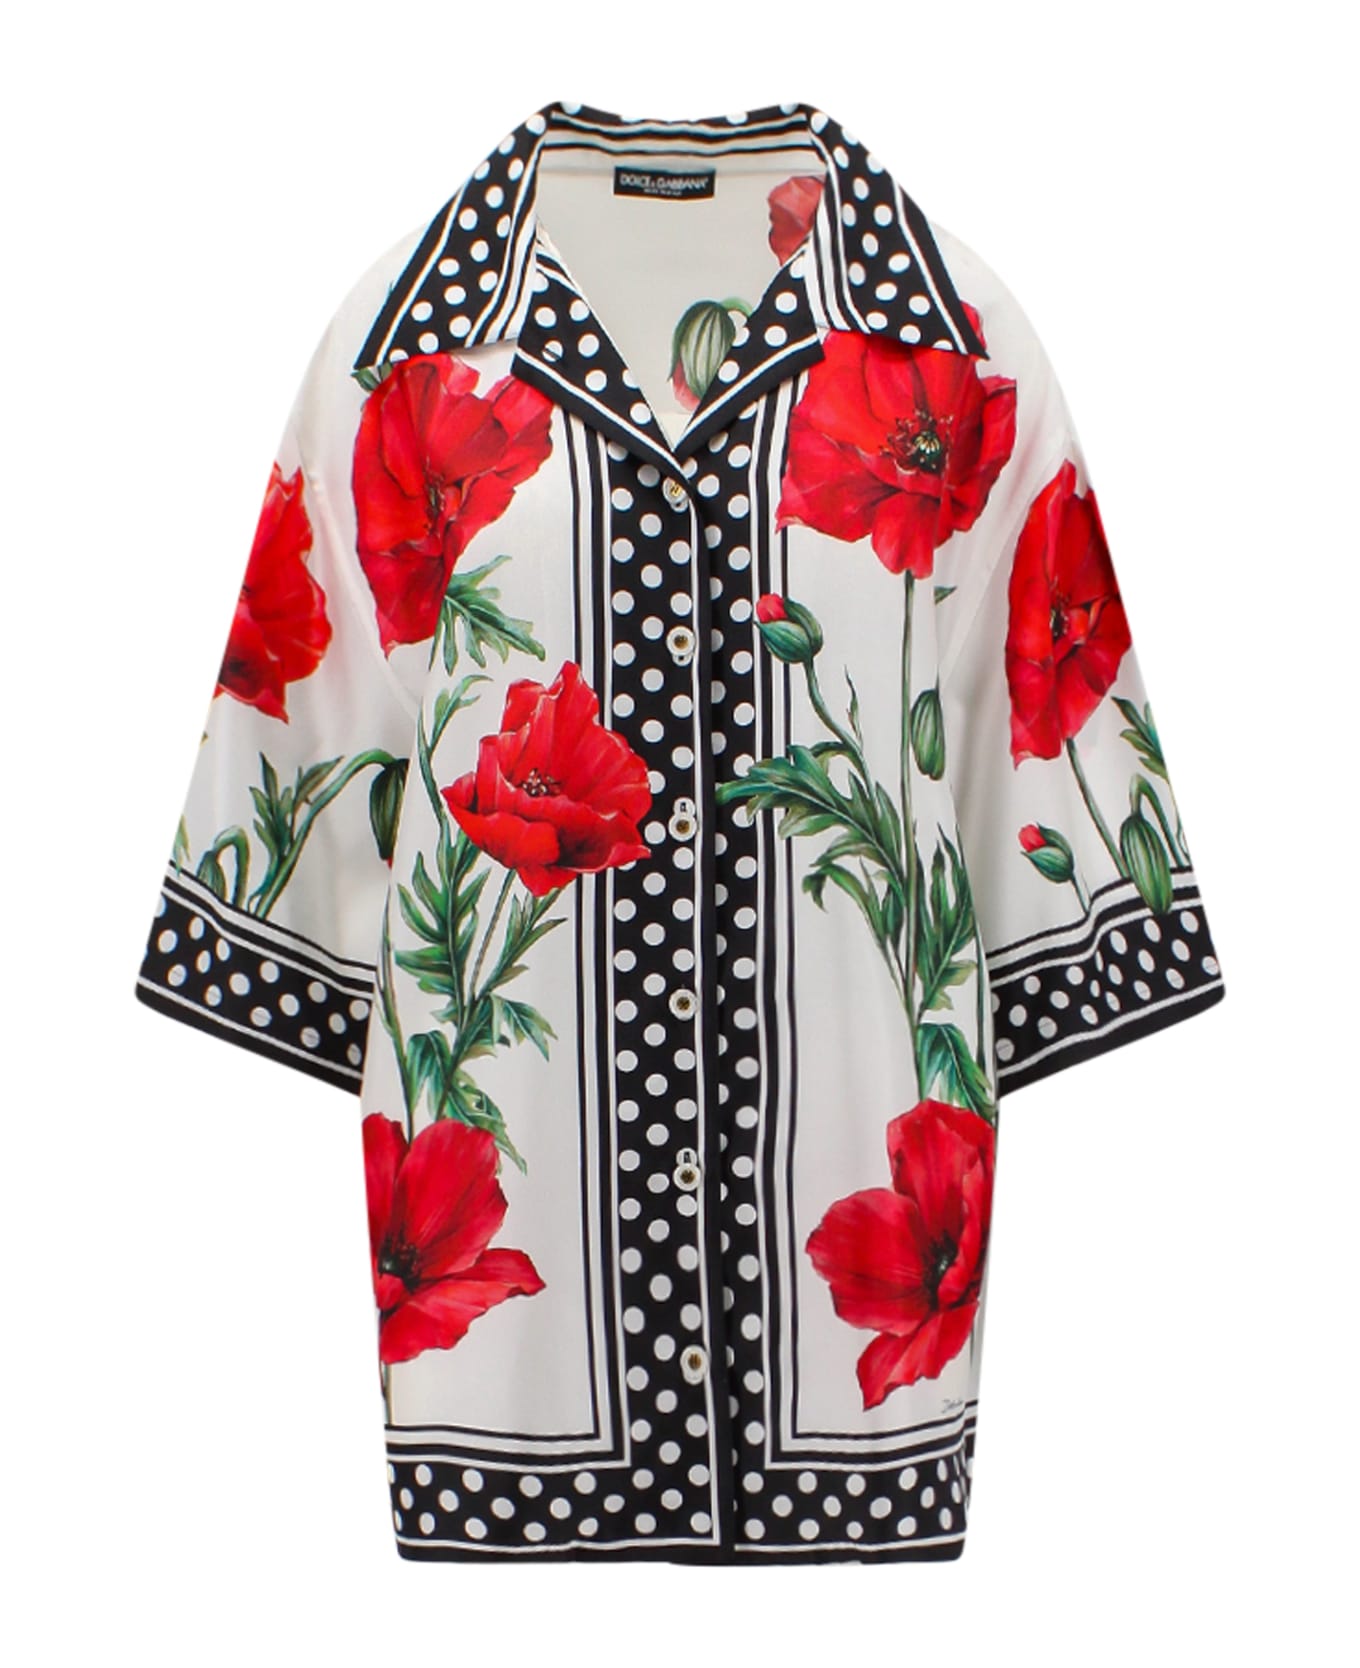 Dolce & Gabbana Floral Dotted Print Shirt - White